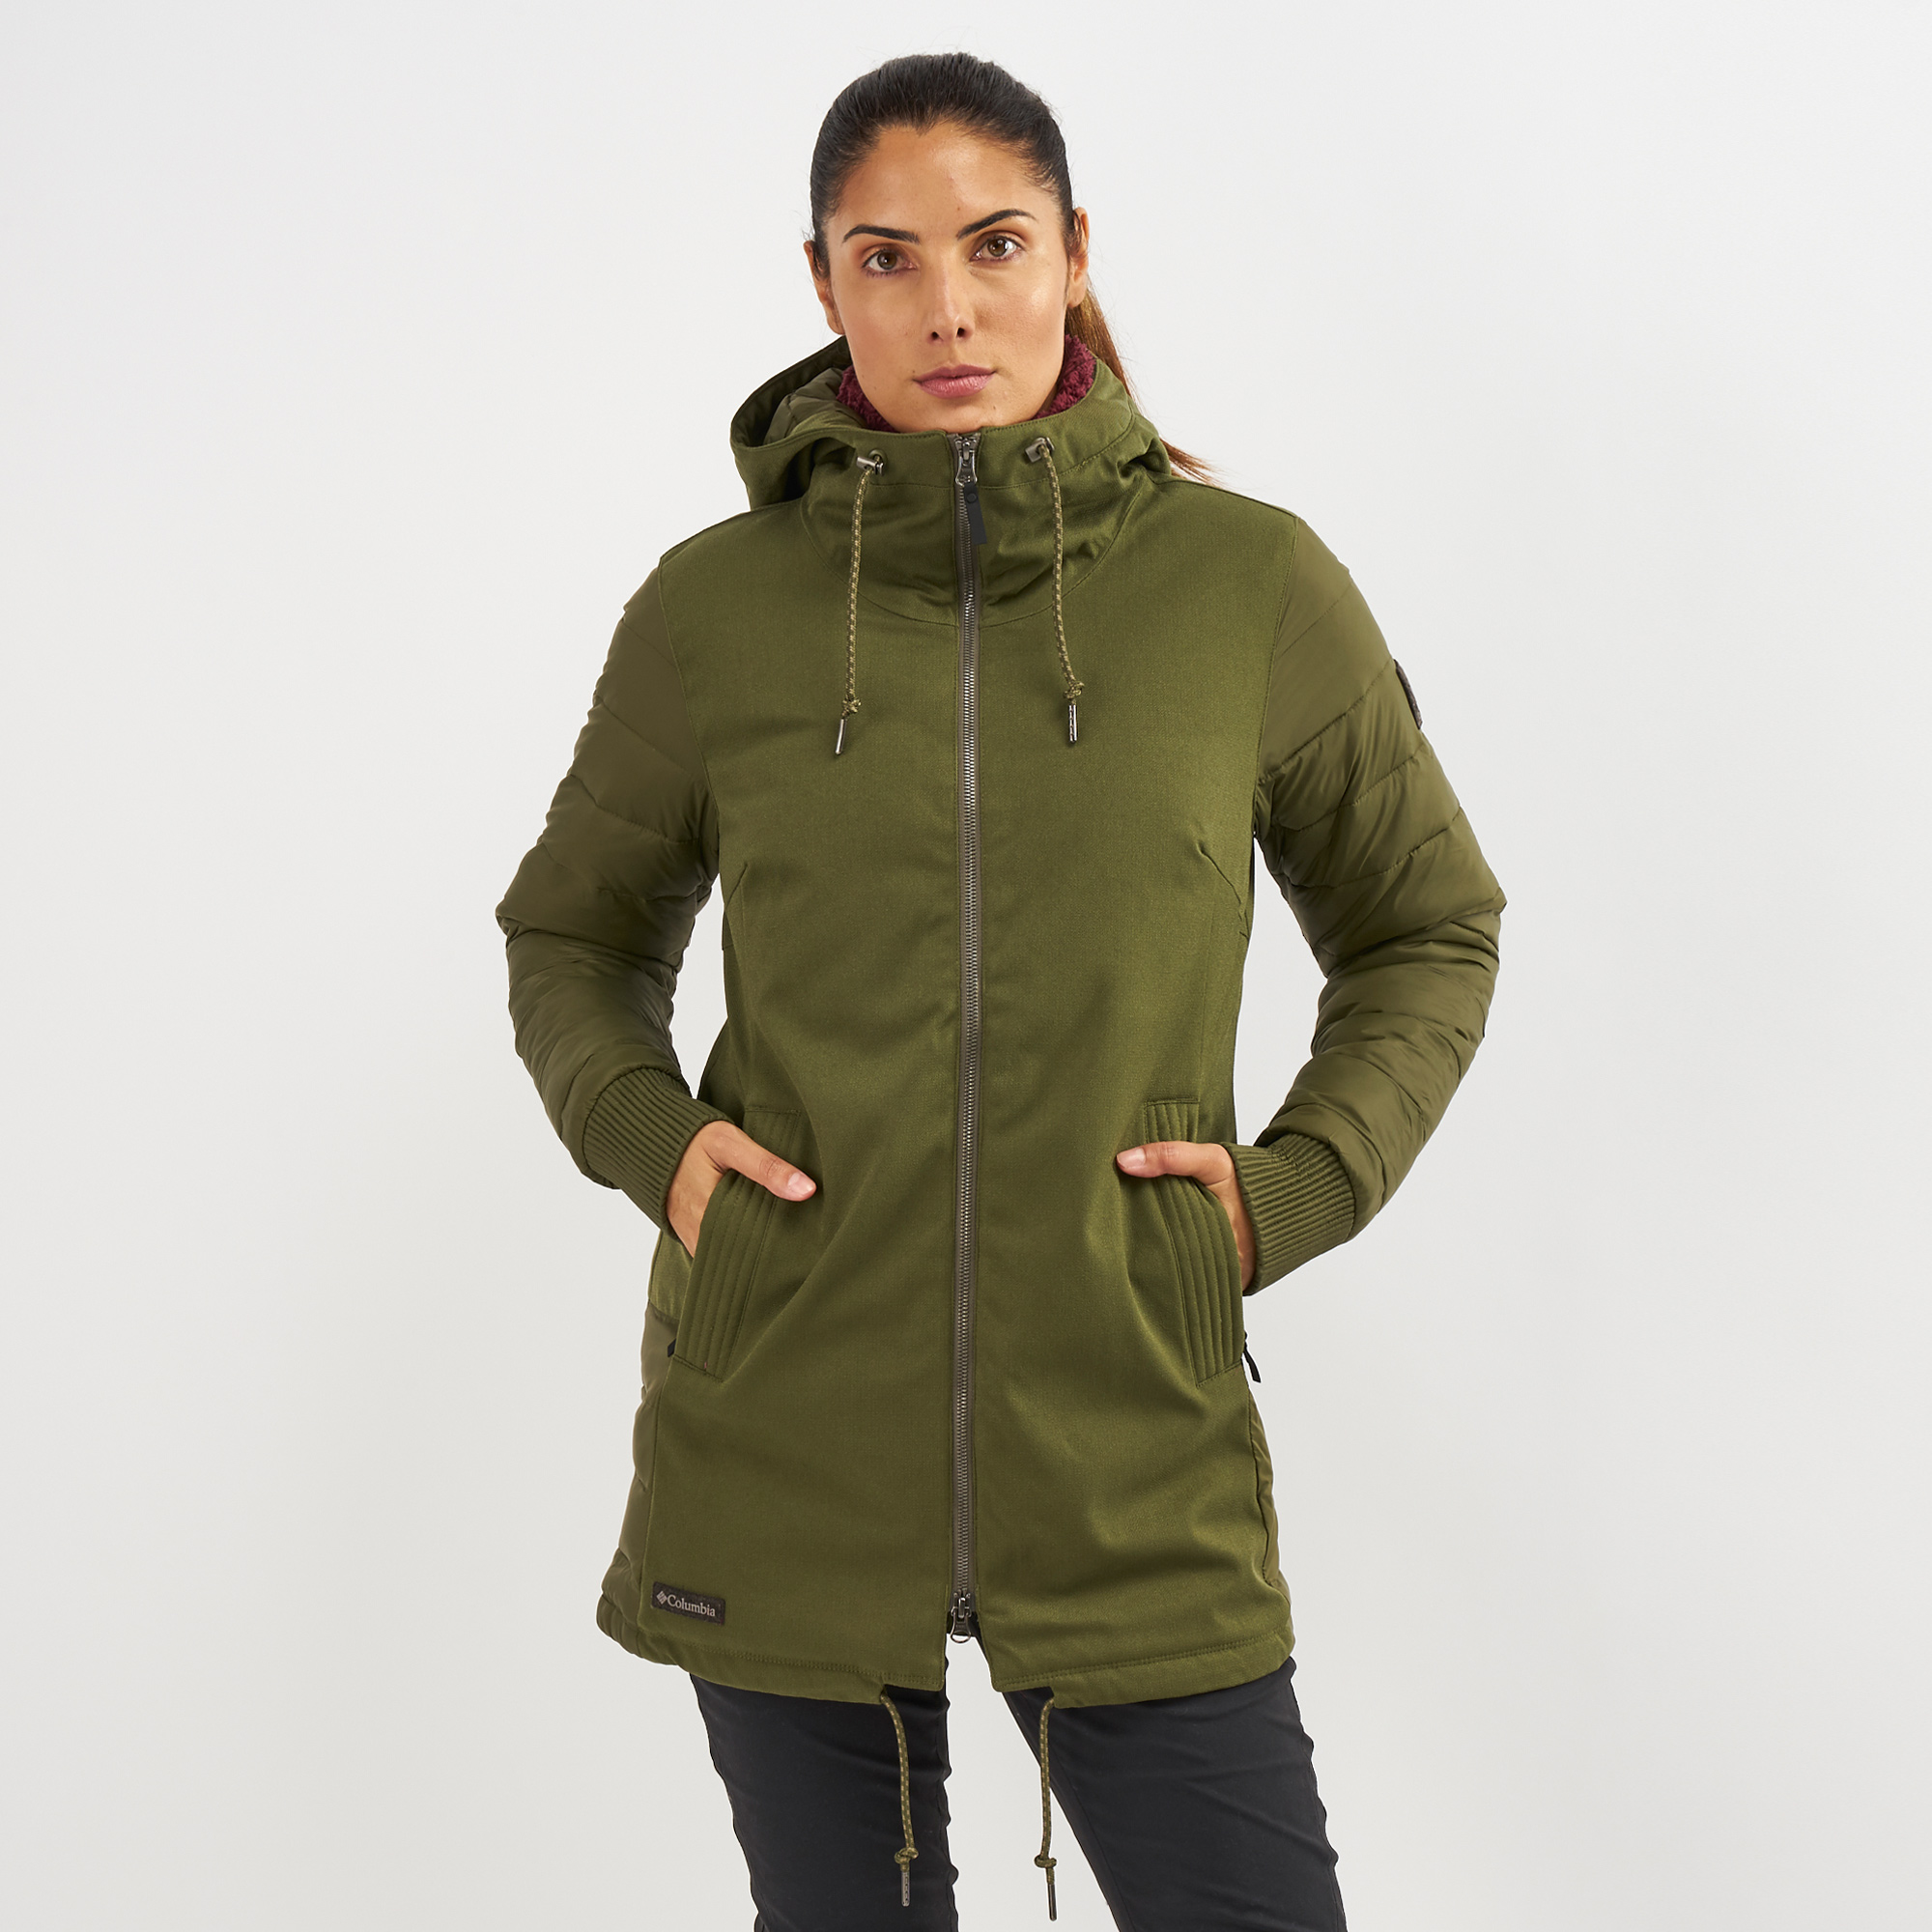 women's boundary bay hybrid jacket